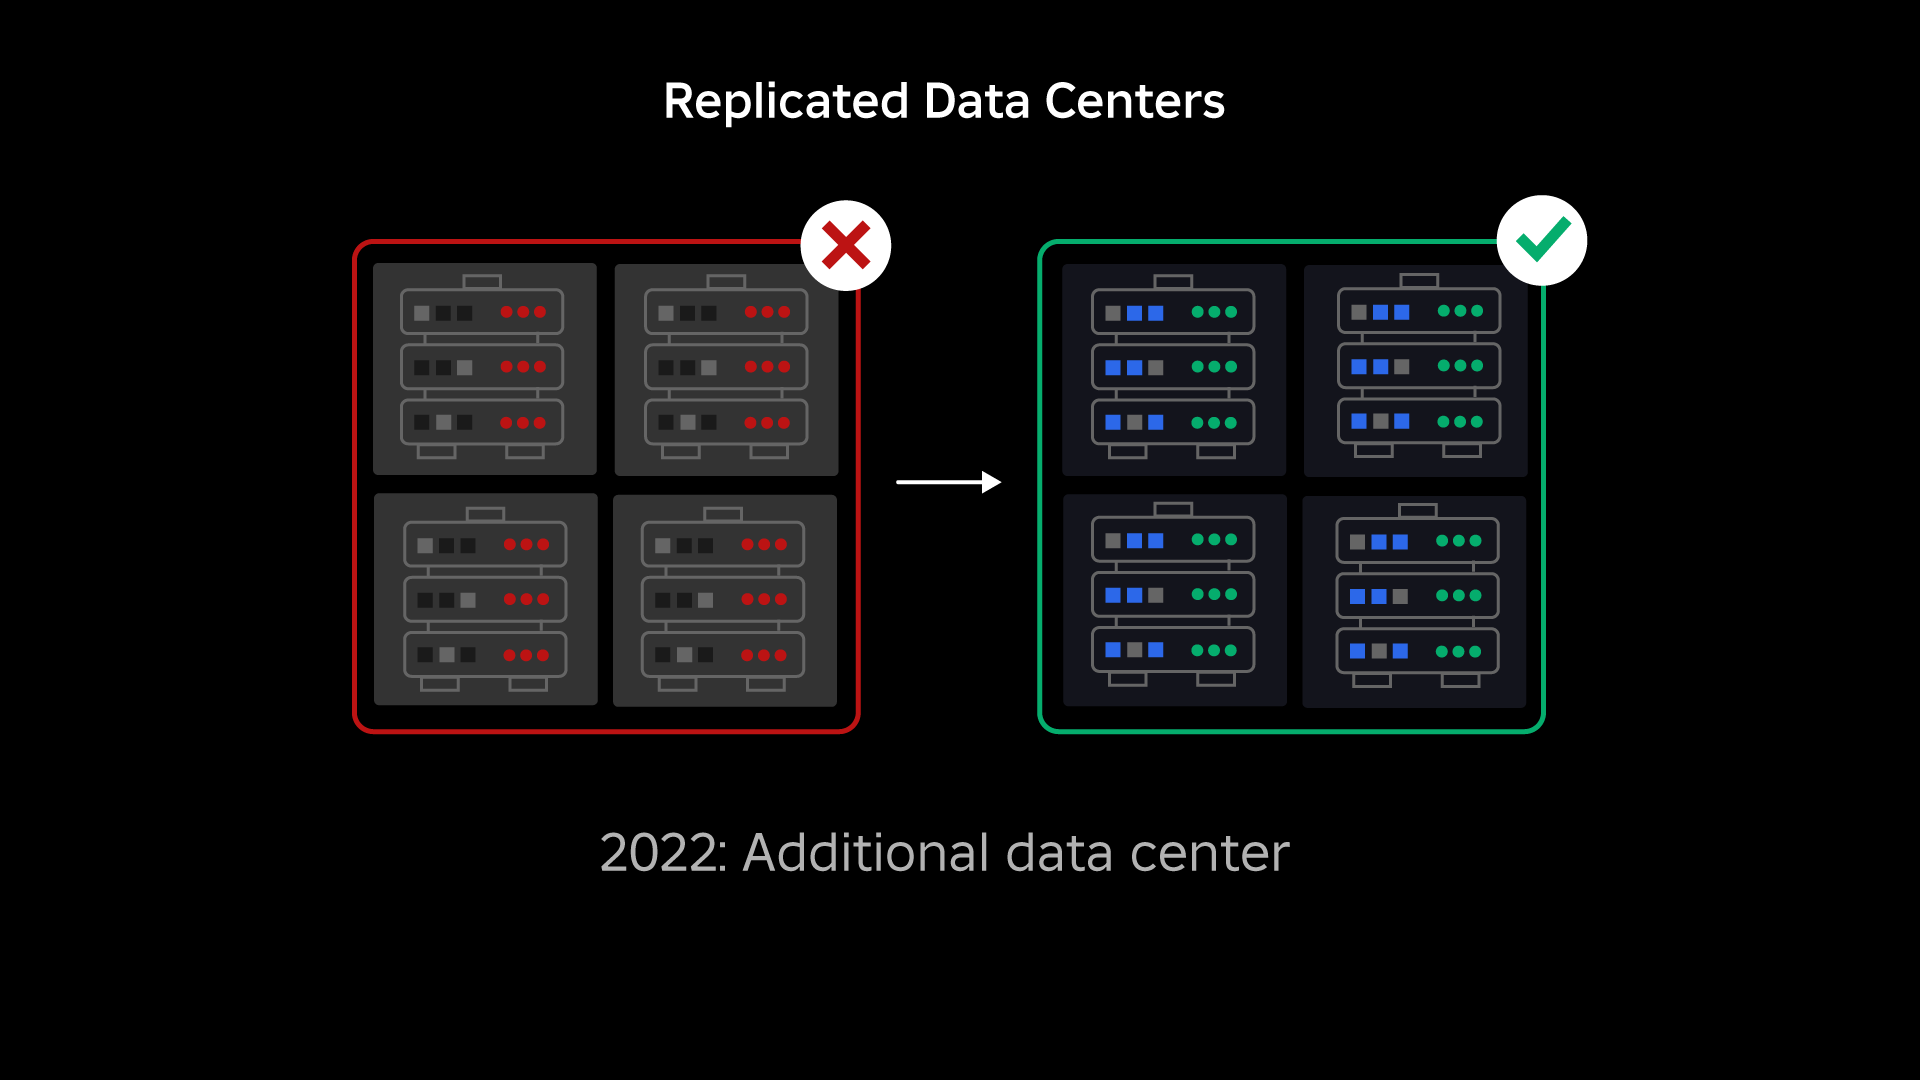 Replicated data centers